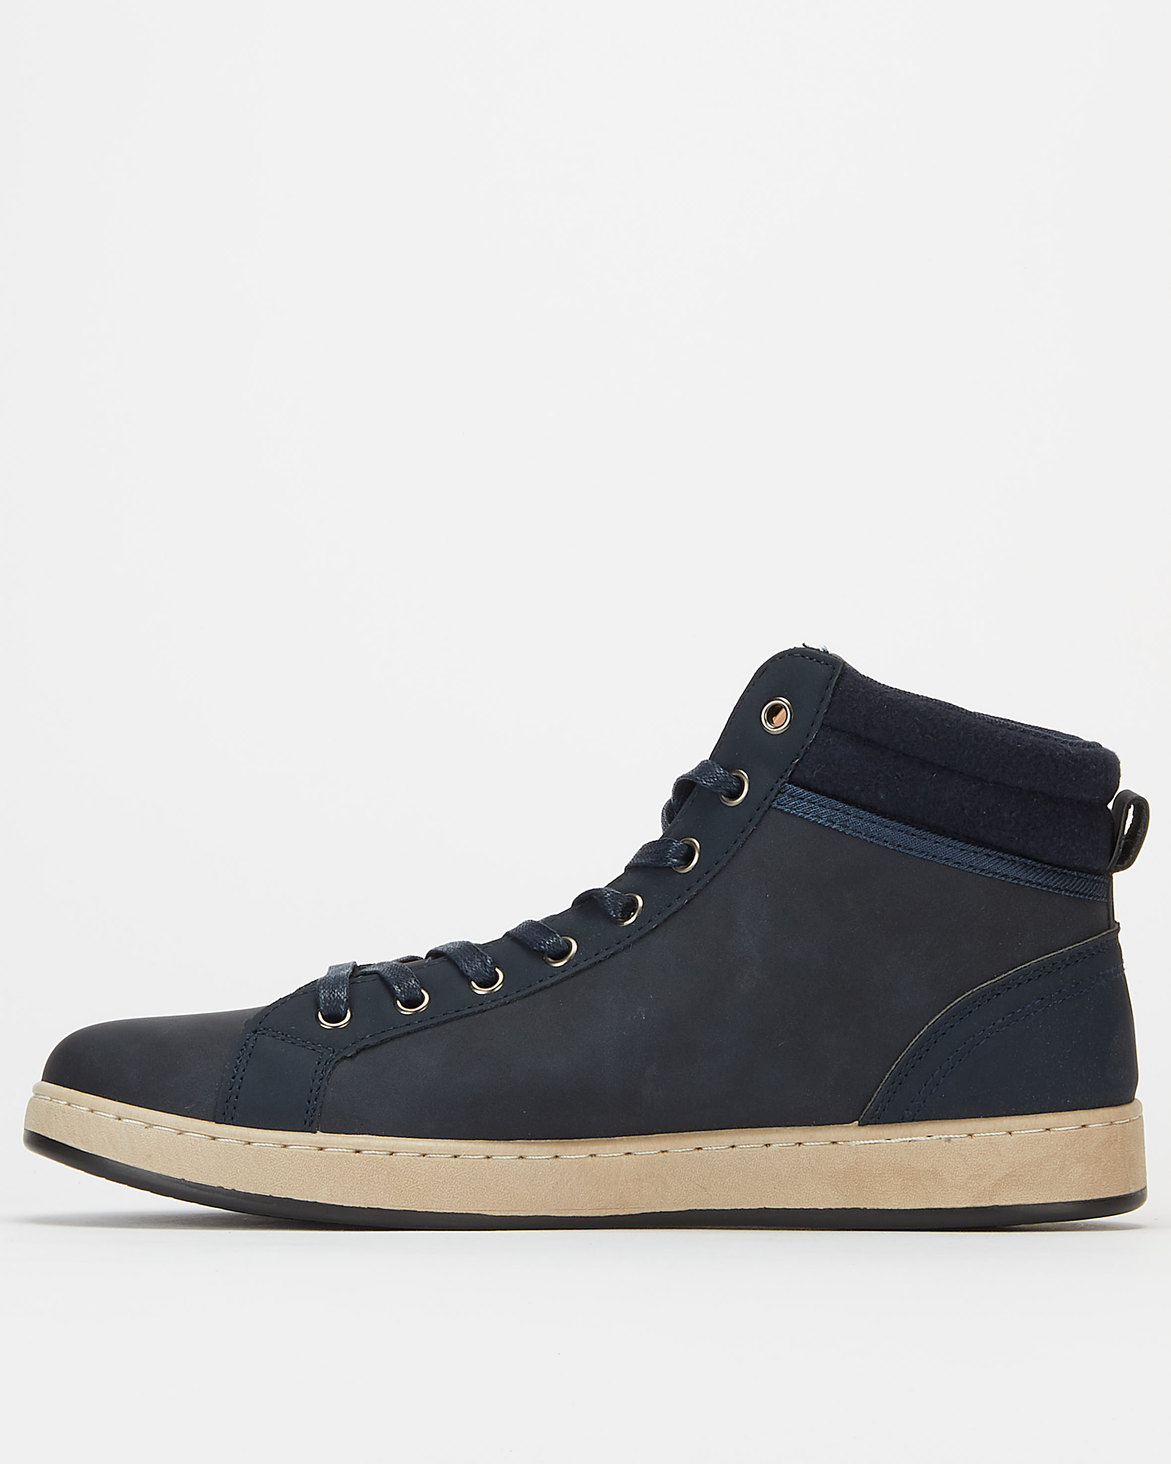 Pierre Cardin Hi Top Sneakers Navy | Zando